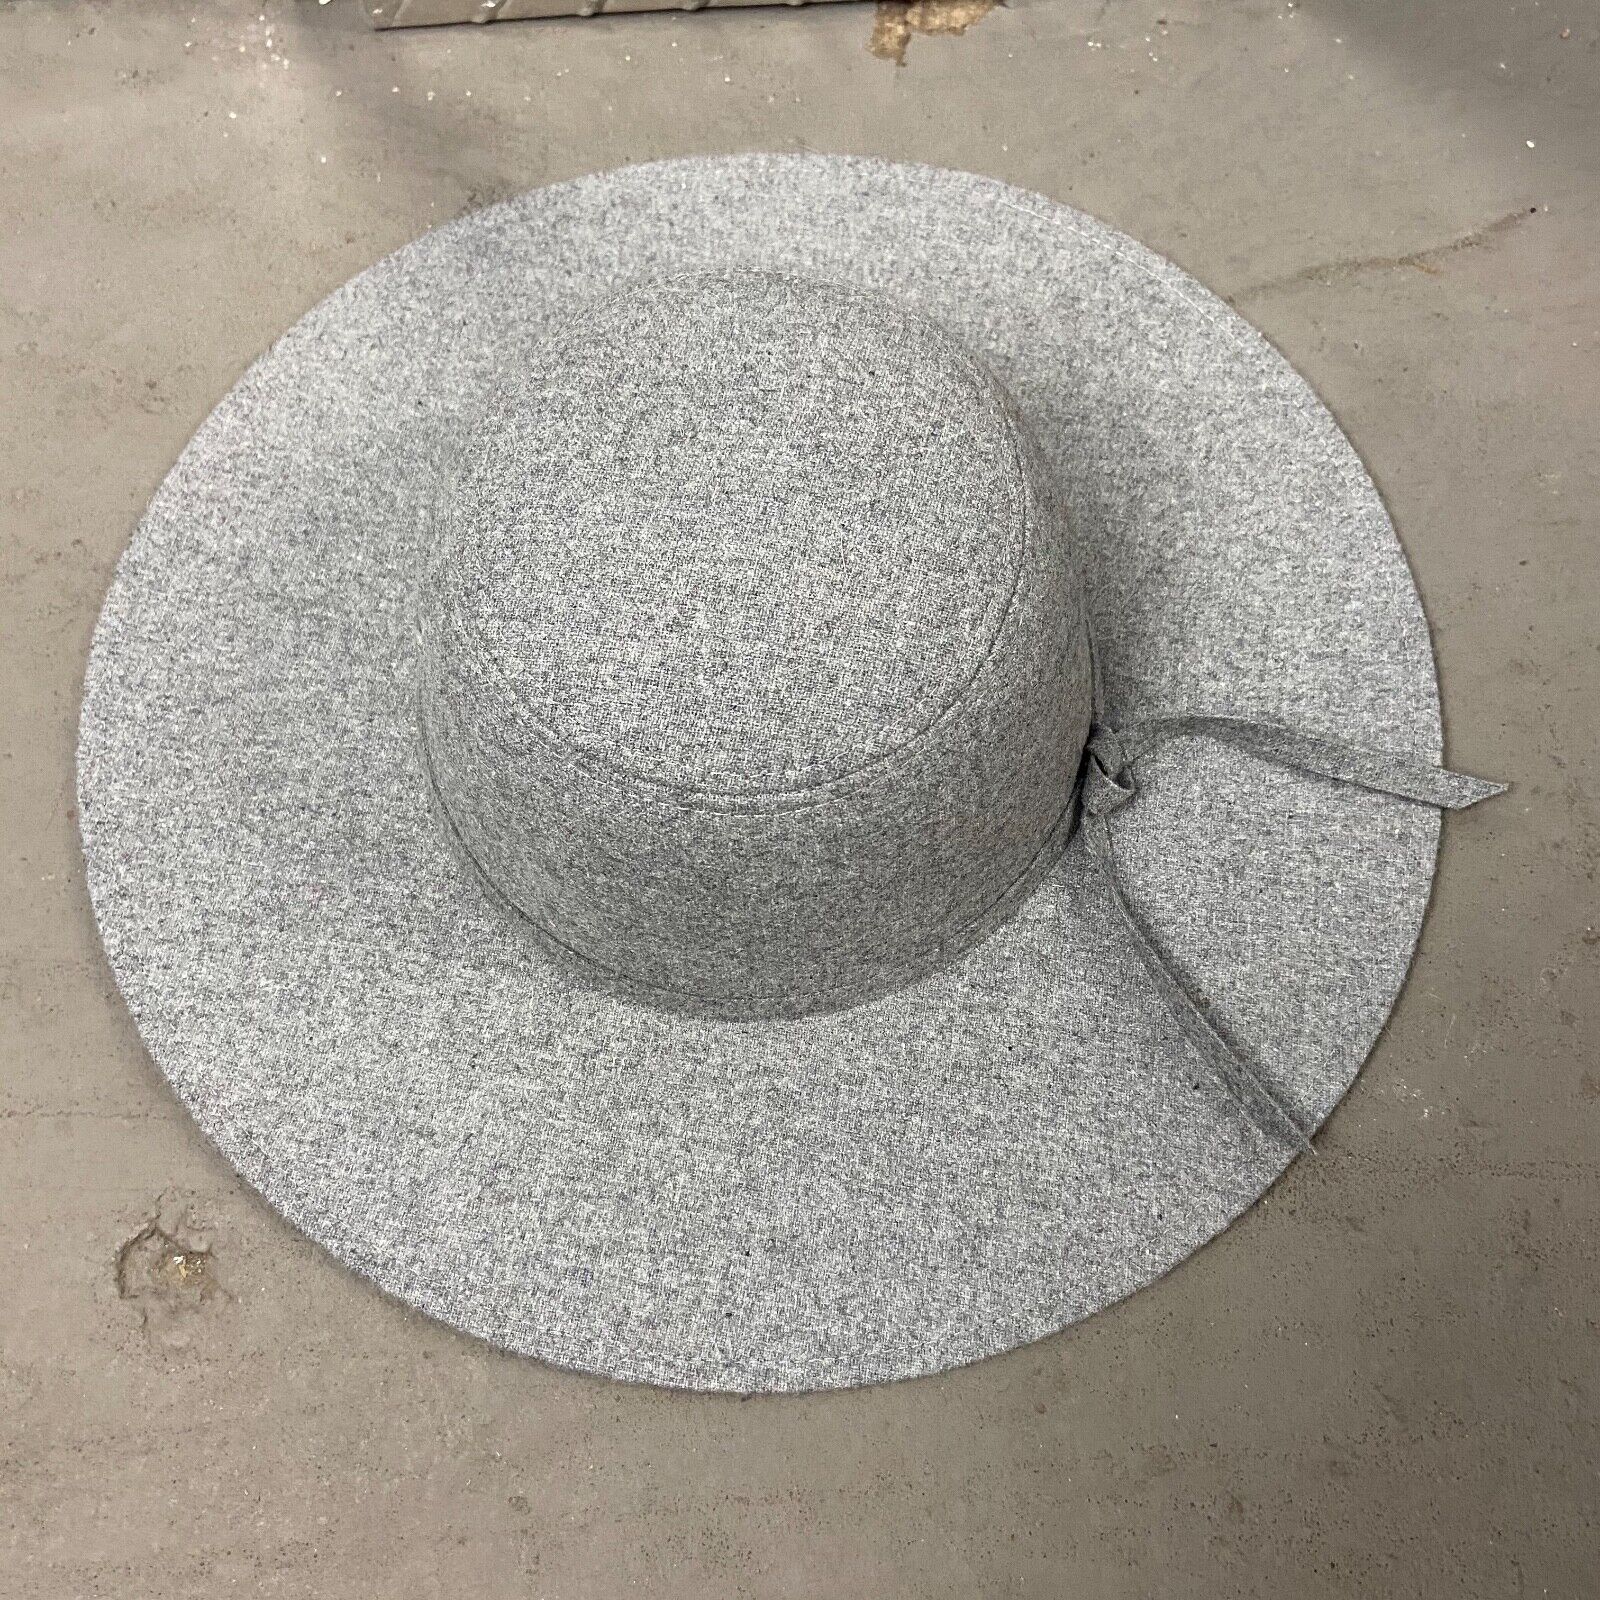 Women's Floppy Gray Hat - image 1